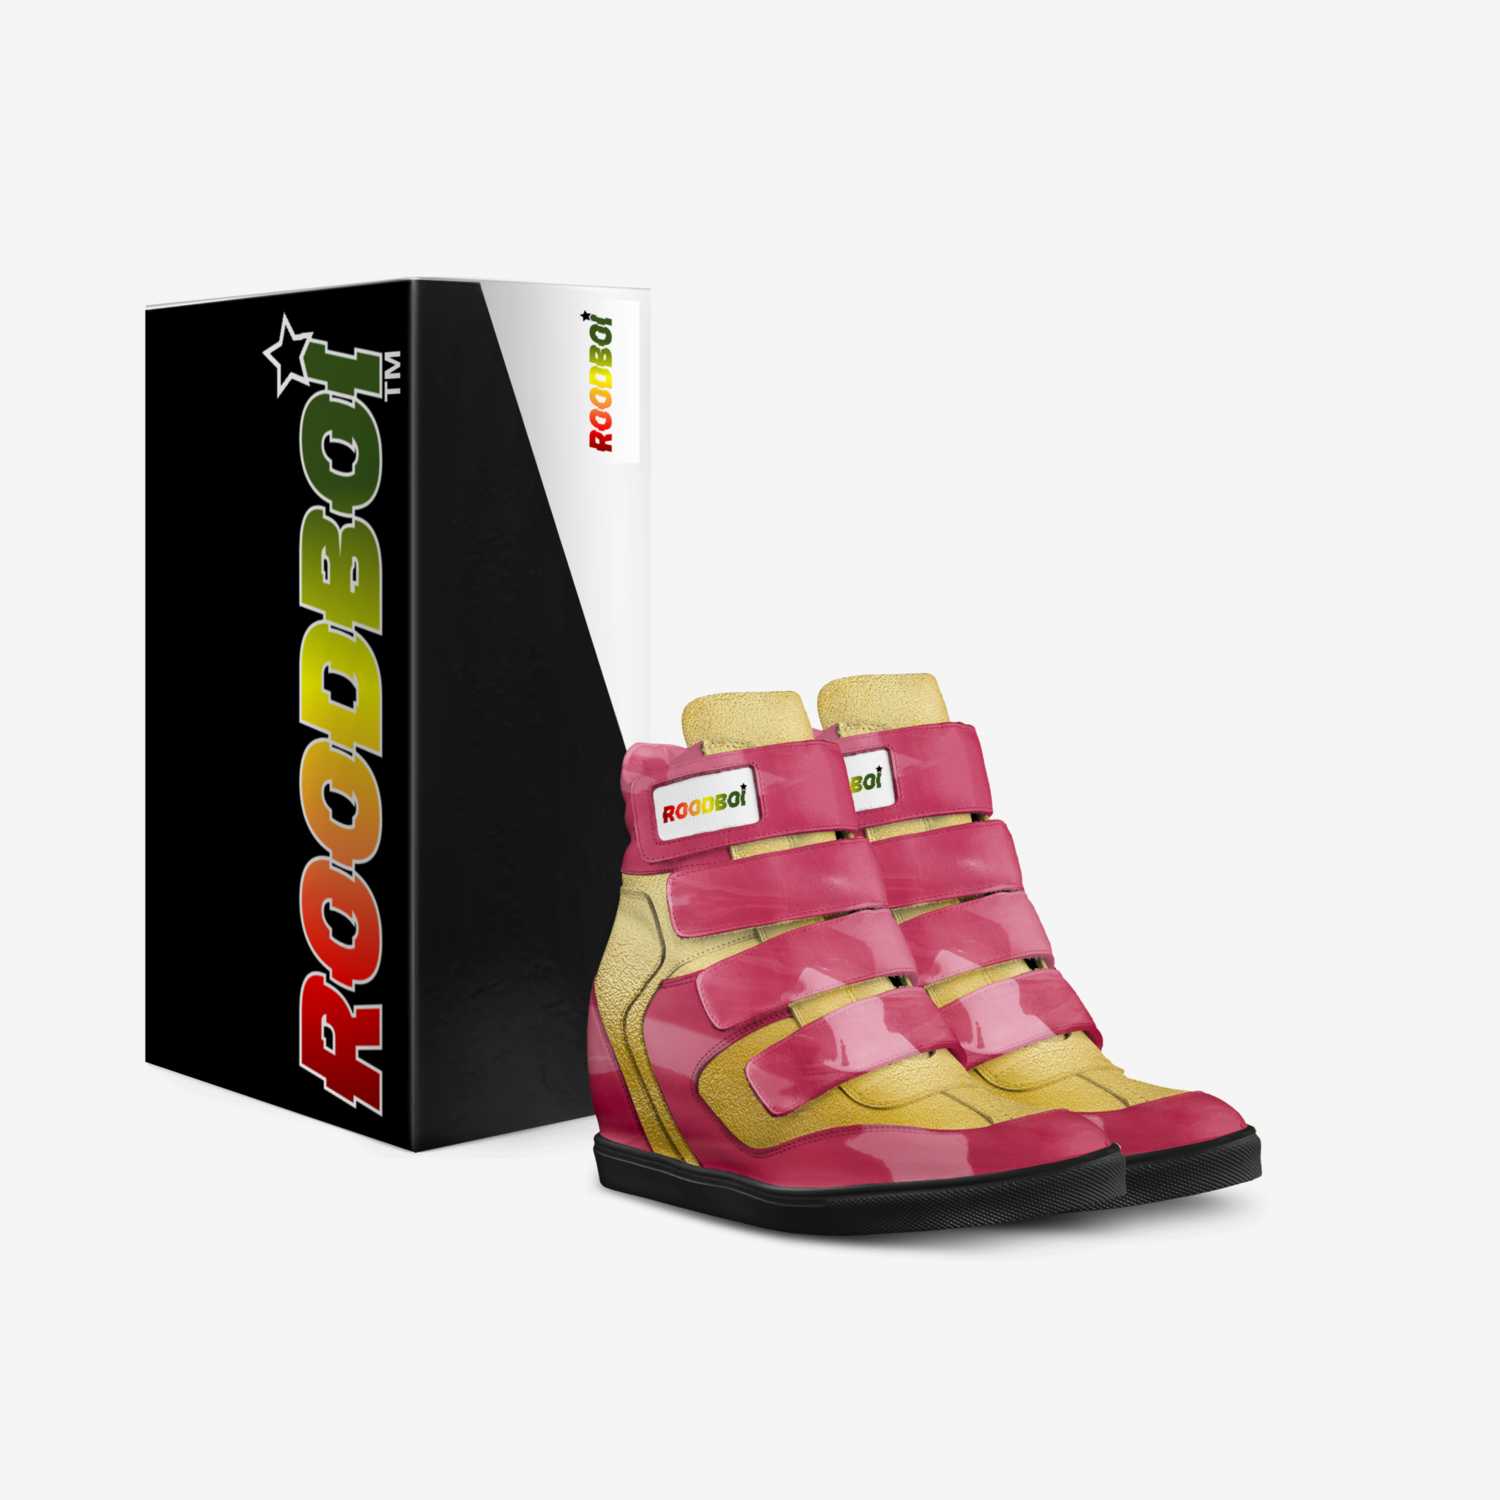 OSHUN custom made in Italy shoes by Shango Don Ragga | Box view